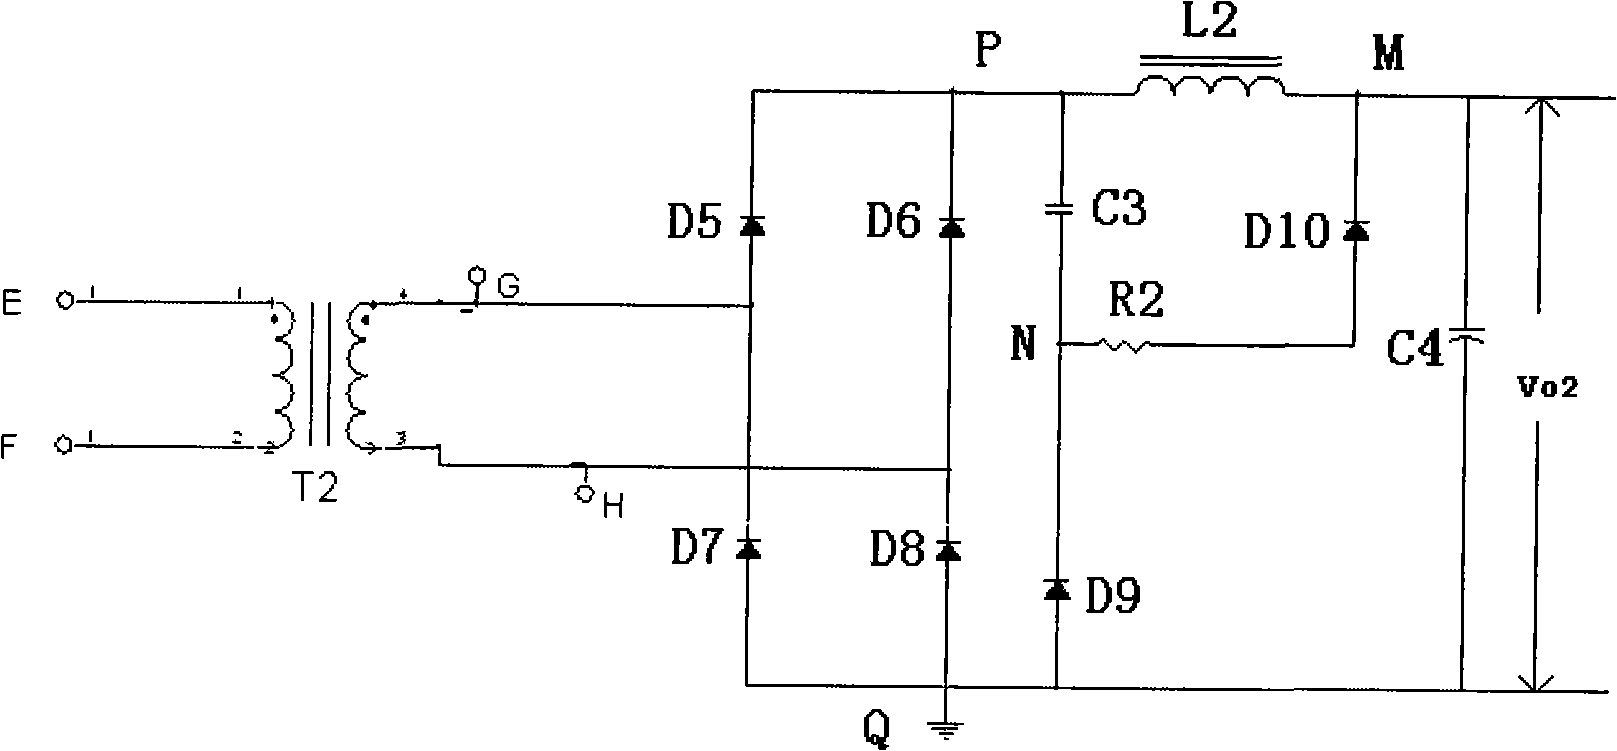 Diode absorption circuit for bridge rectifier circuit